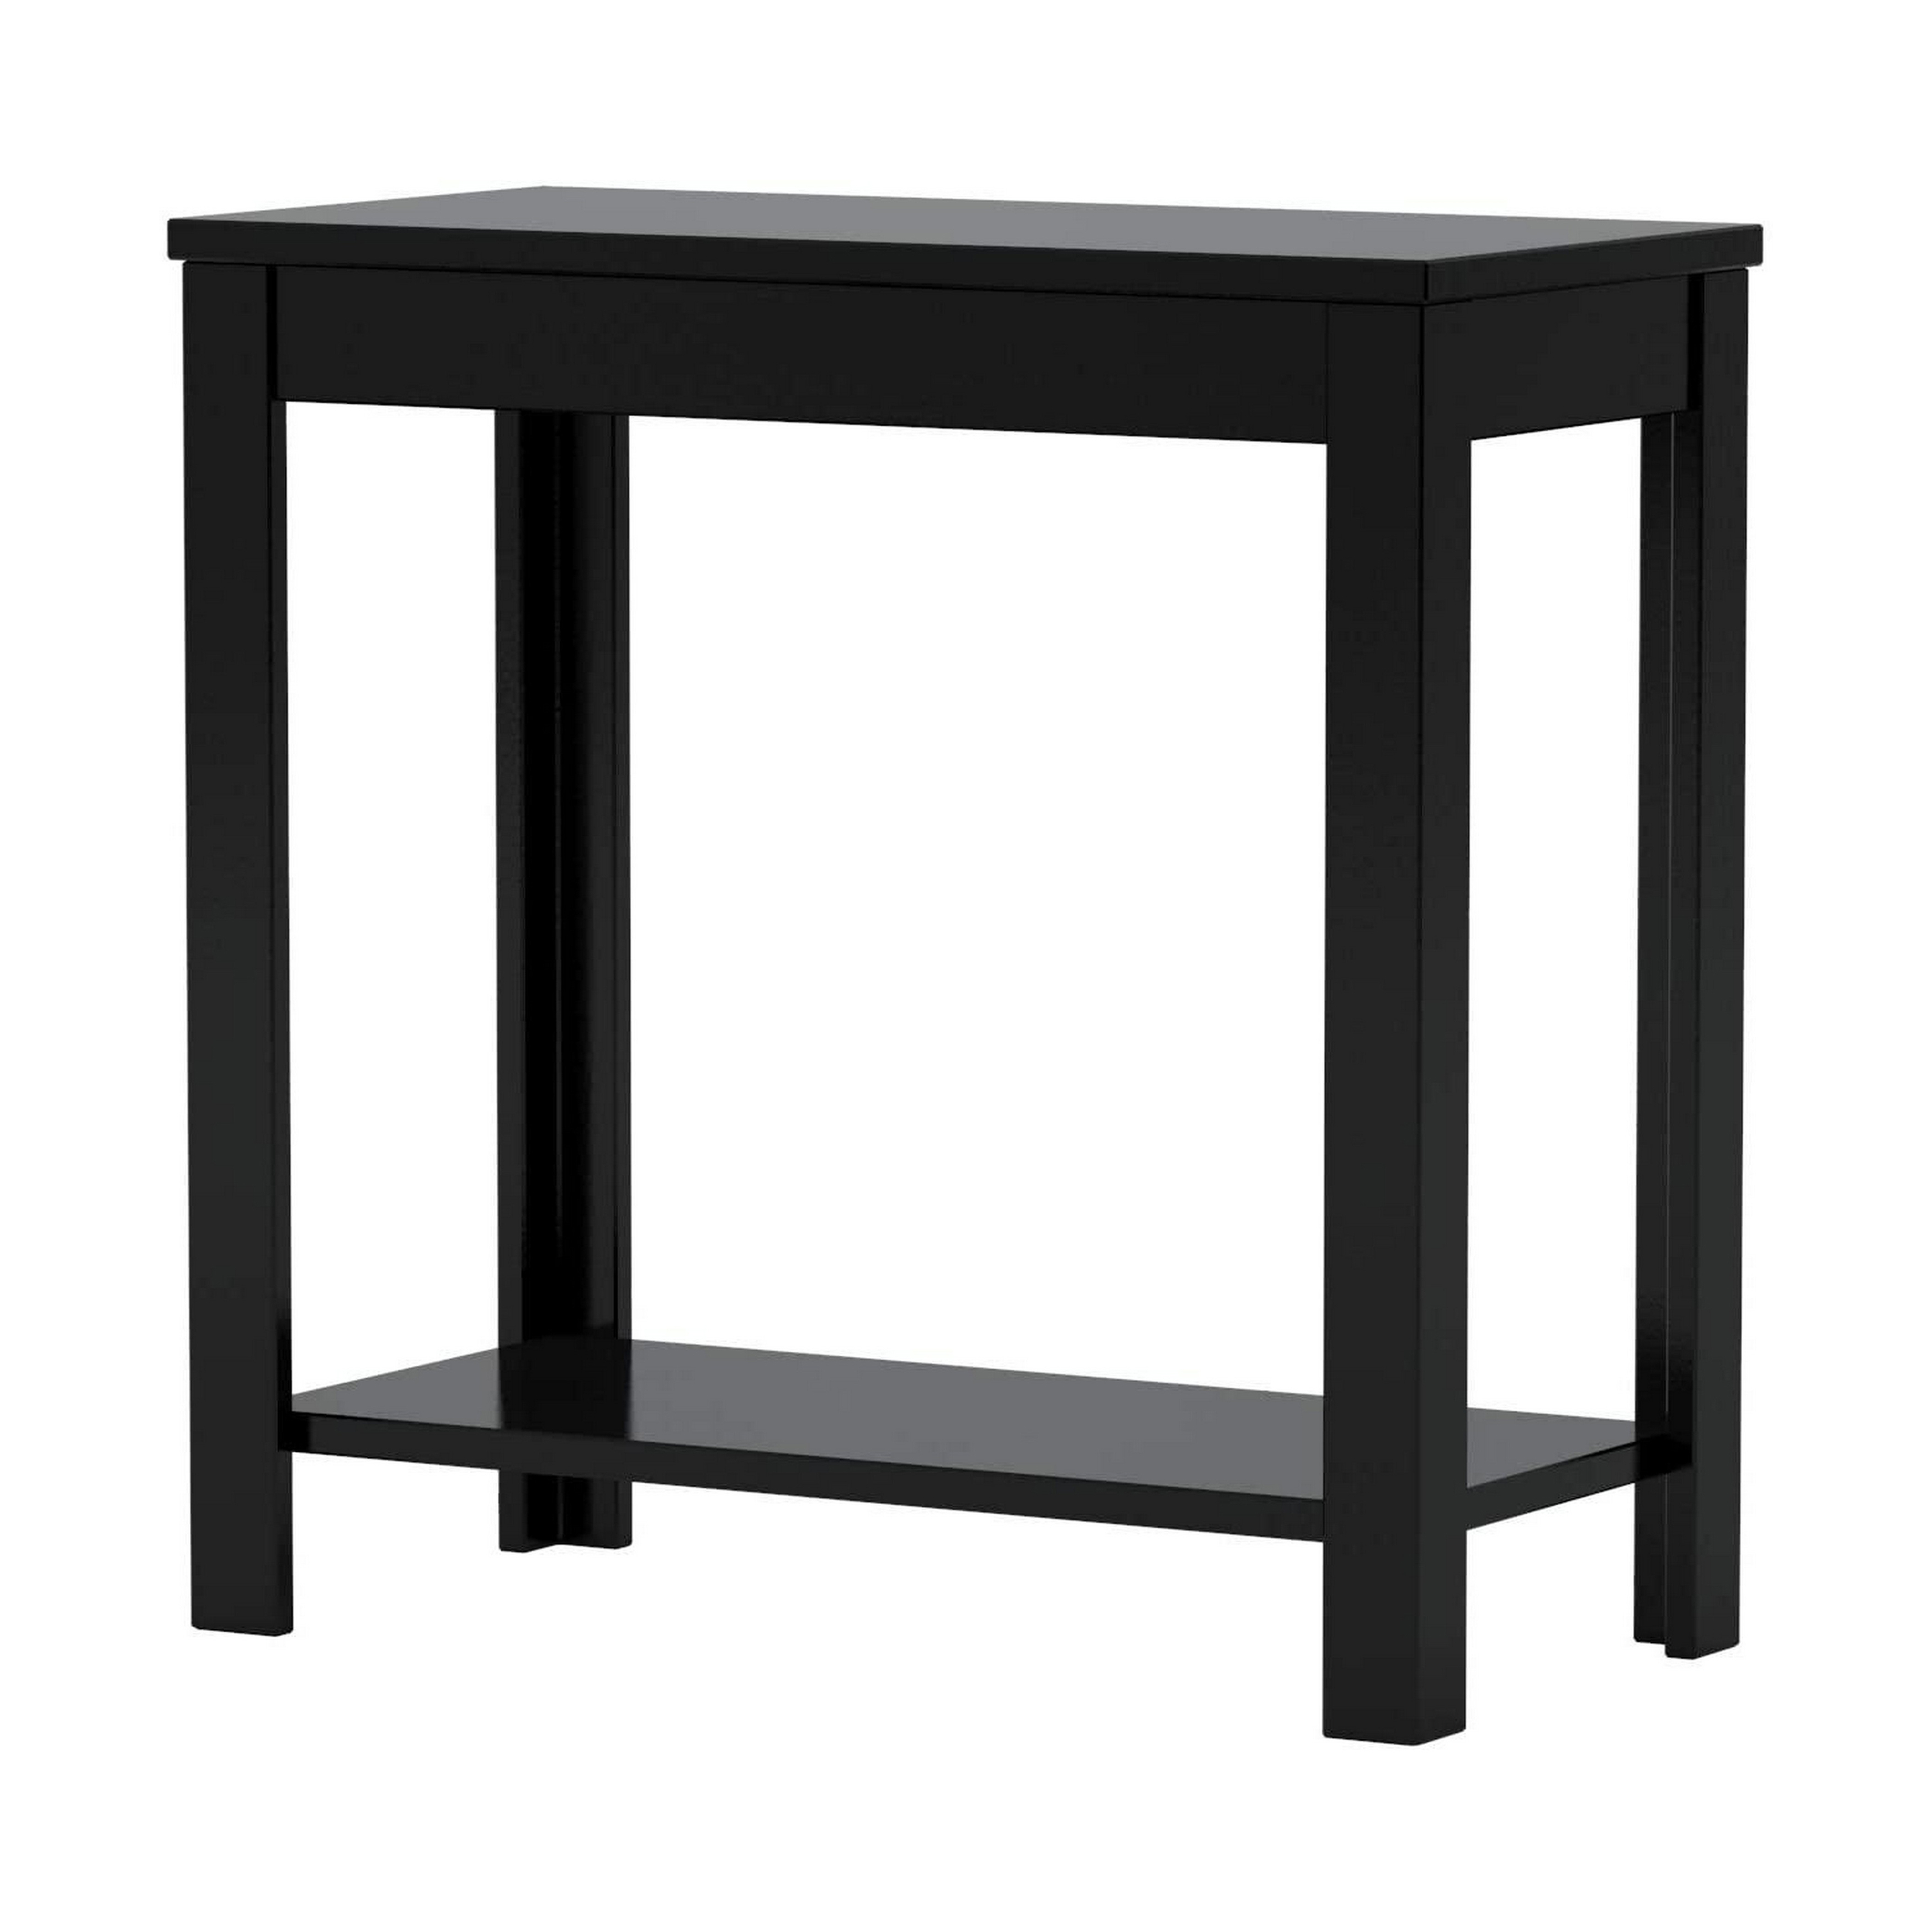 Minimalistic Designed Wooden Chairside Table, Black- Saltoro Sherpi